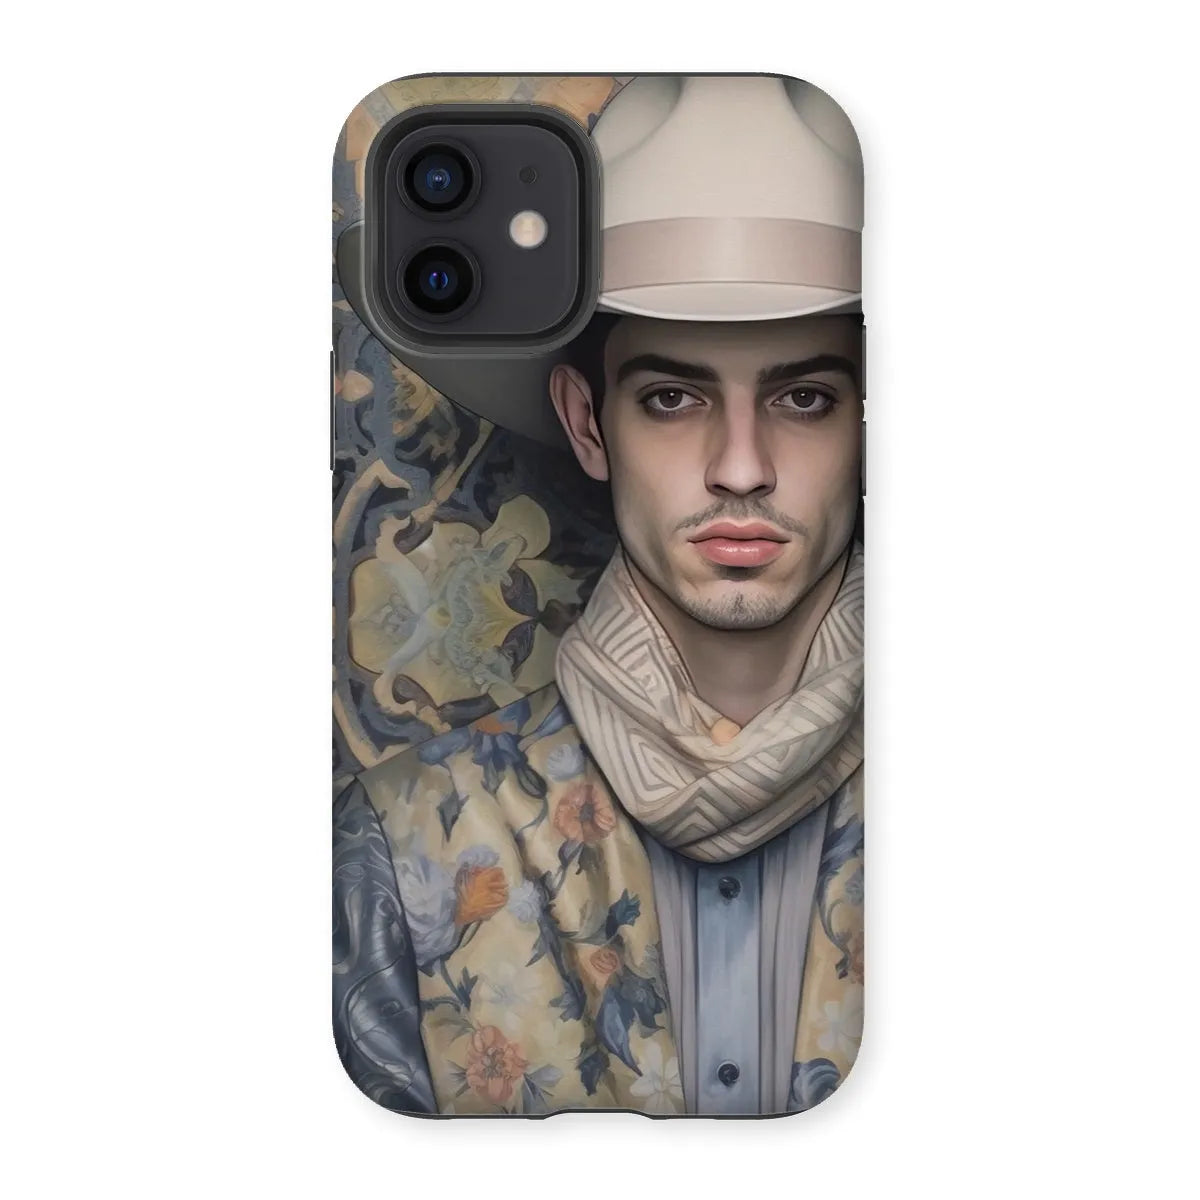 Farzad The Gay Cowboy - Dandy Gay Men Art Phone Case - Iphone 12 / Matte - Mobile Phone Cases - Aesthetic Art